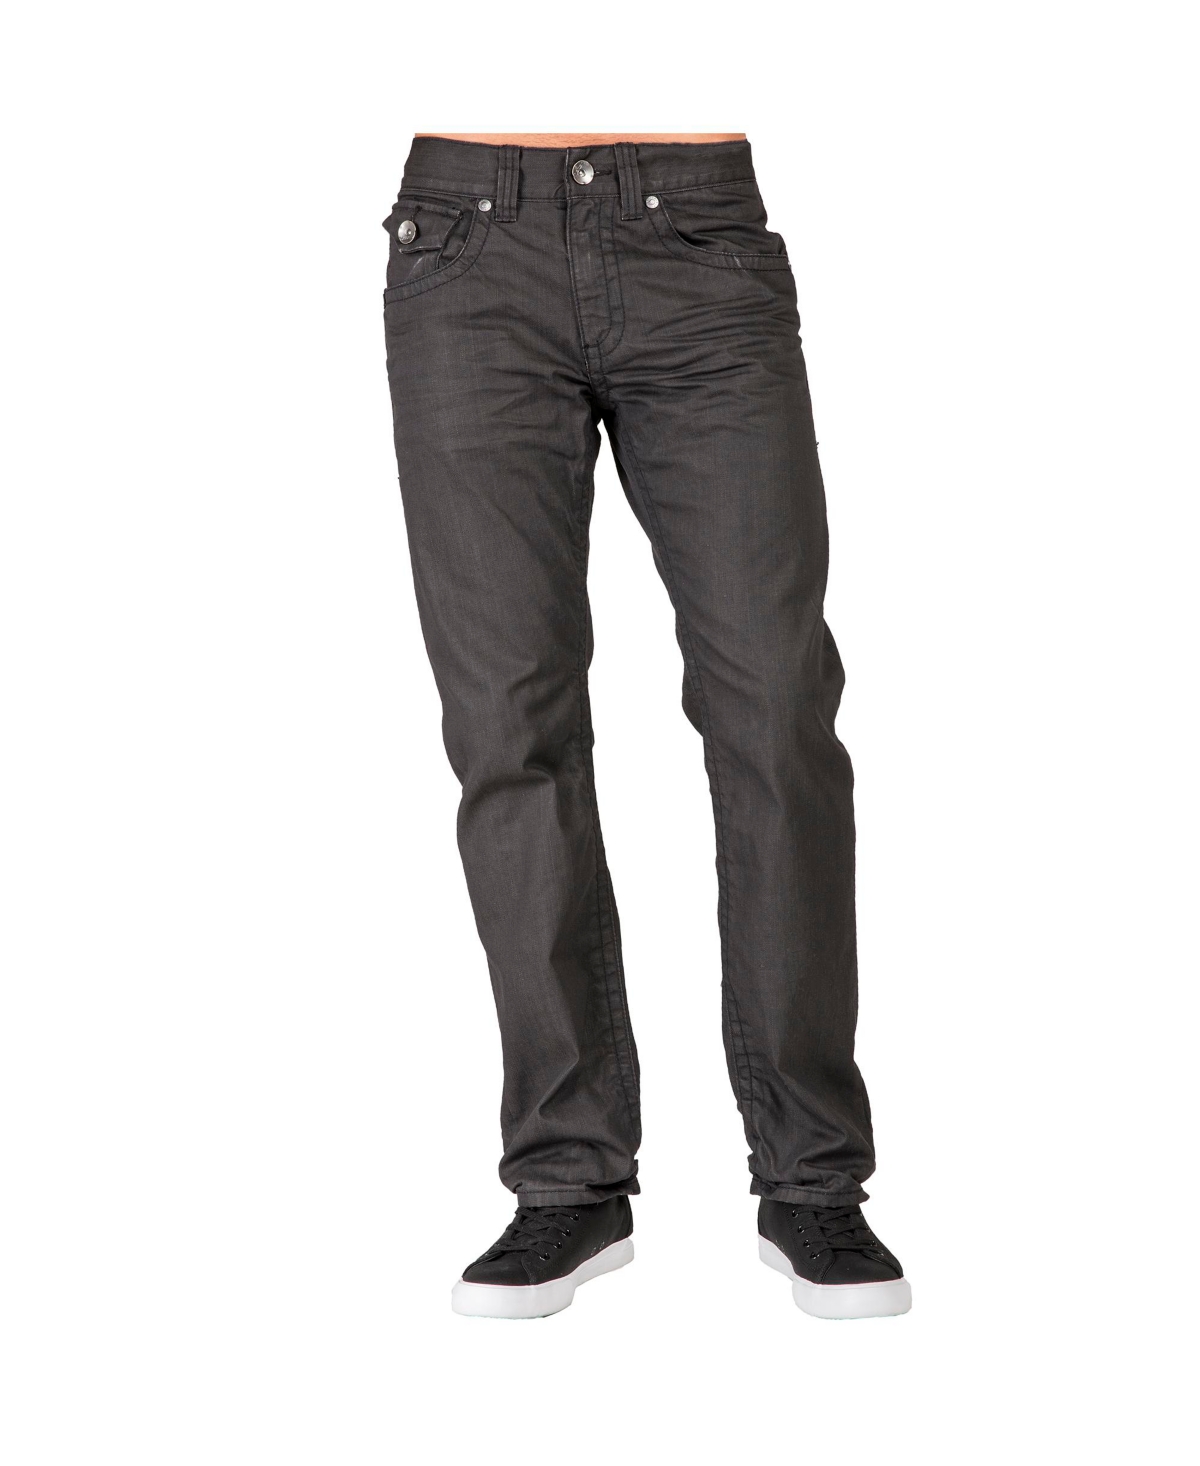 Men's Relaxed Straight Leg Premium Denim Jeans Black Coated Throwback Style Zipper Trim Pockets - Blue burst